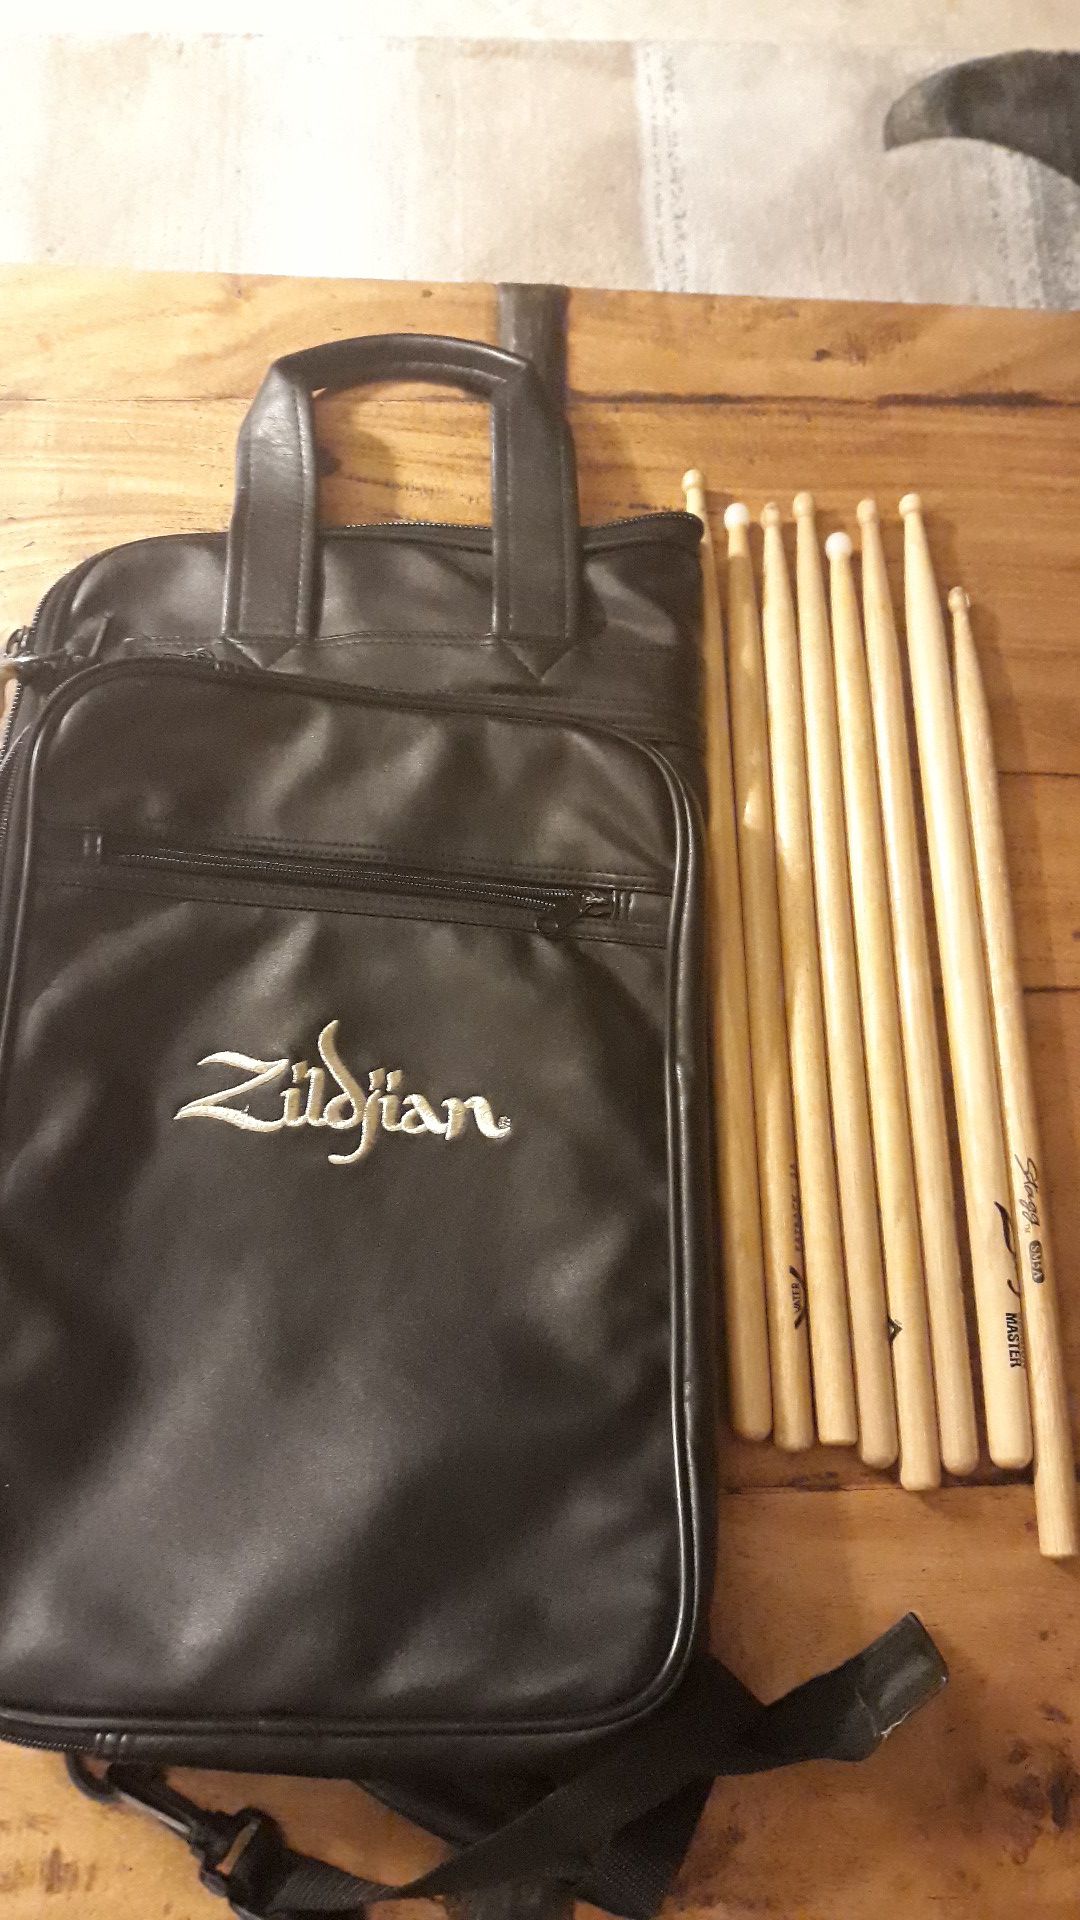 Zildjian drum stick bag with eight drumsticks